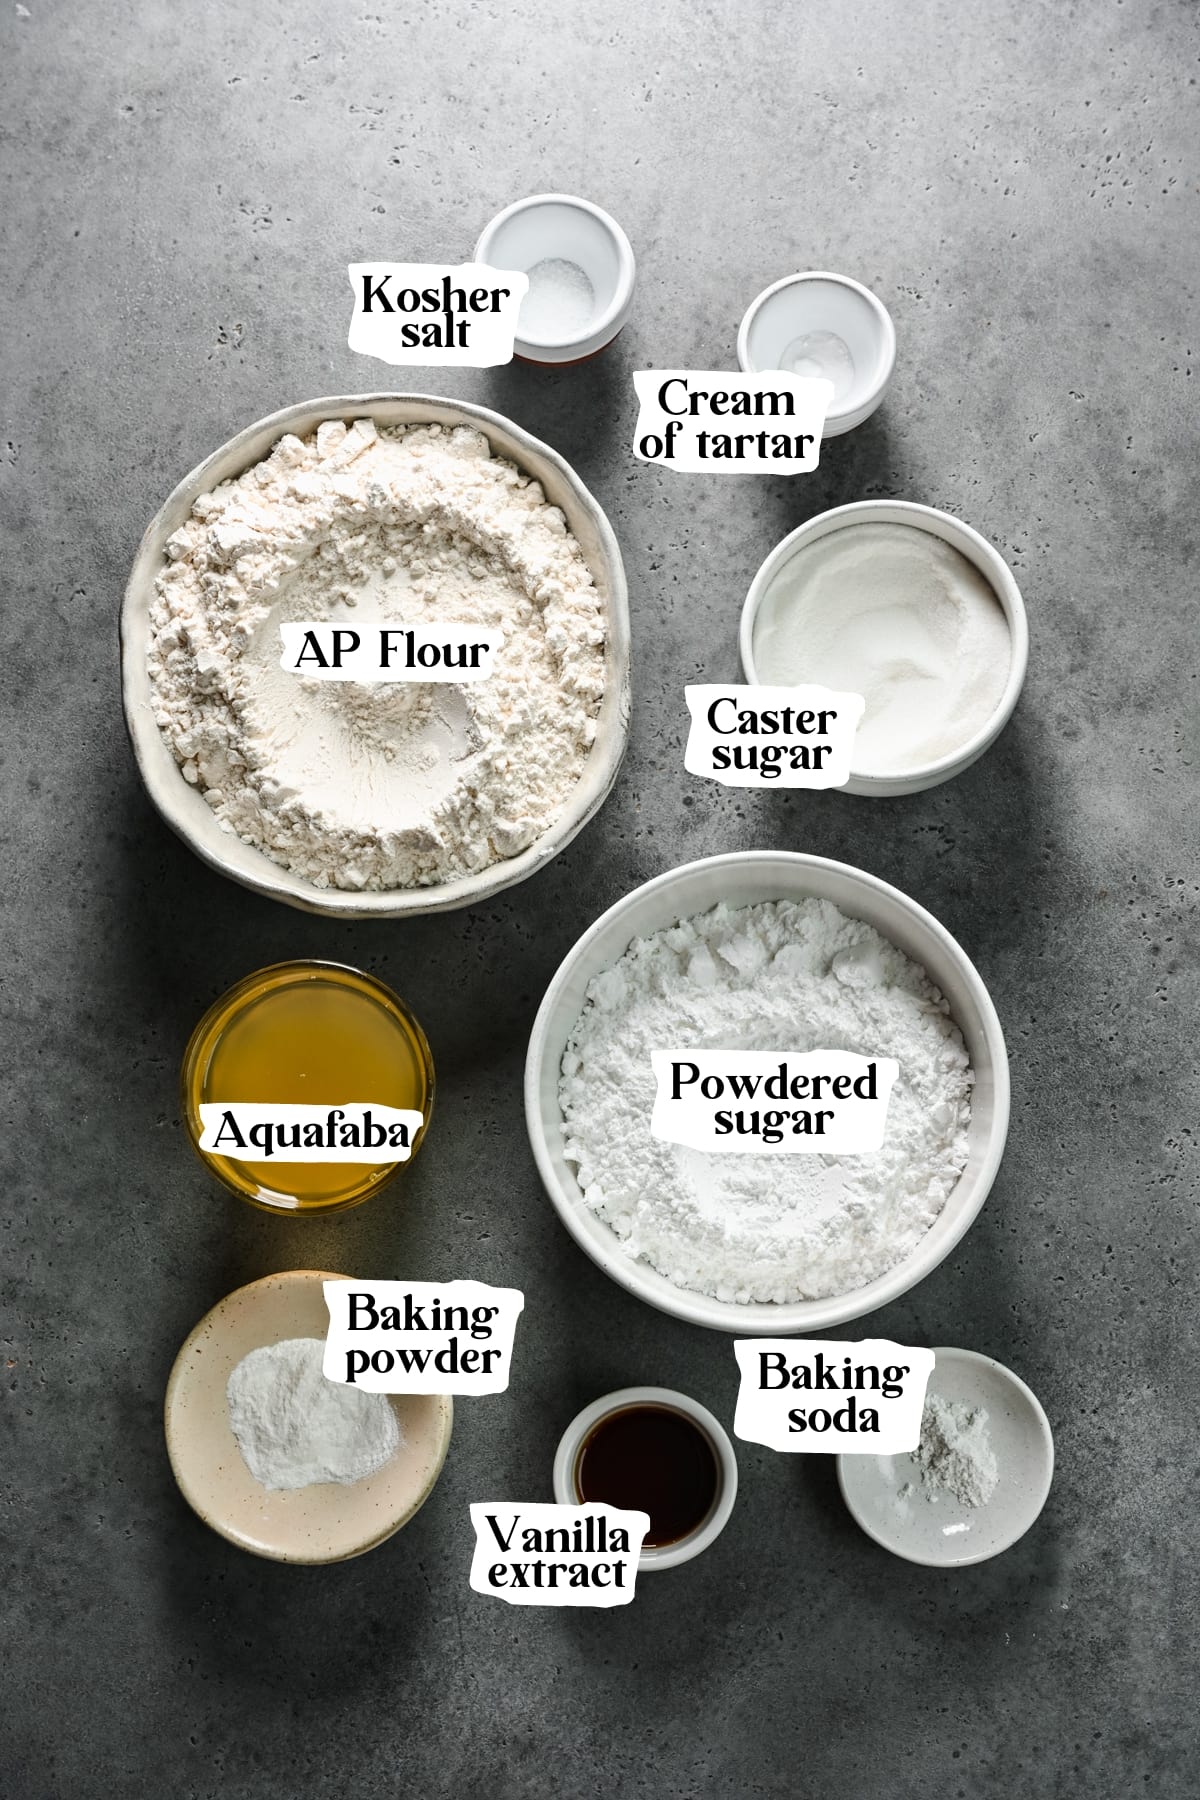 Overhead view of ingredients, including kosher salt, cream of tartar, ap flour, caster sugar, aquafaba, powdered sugar, baking powder and soda, and vanilla extract.